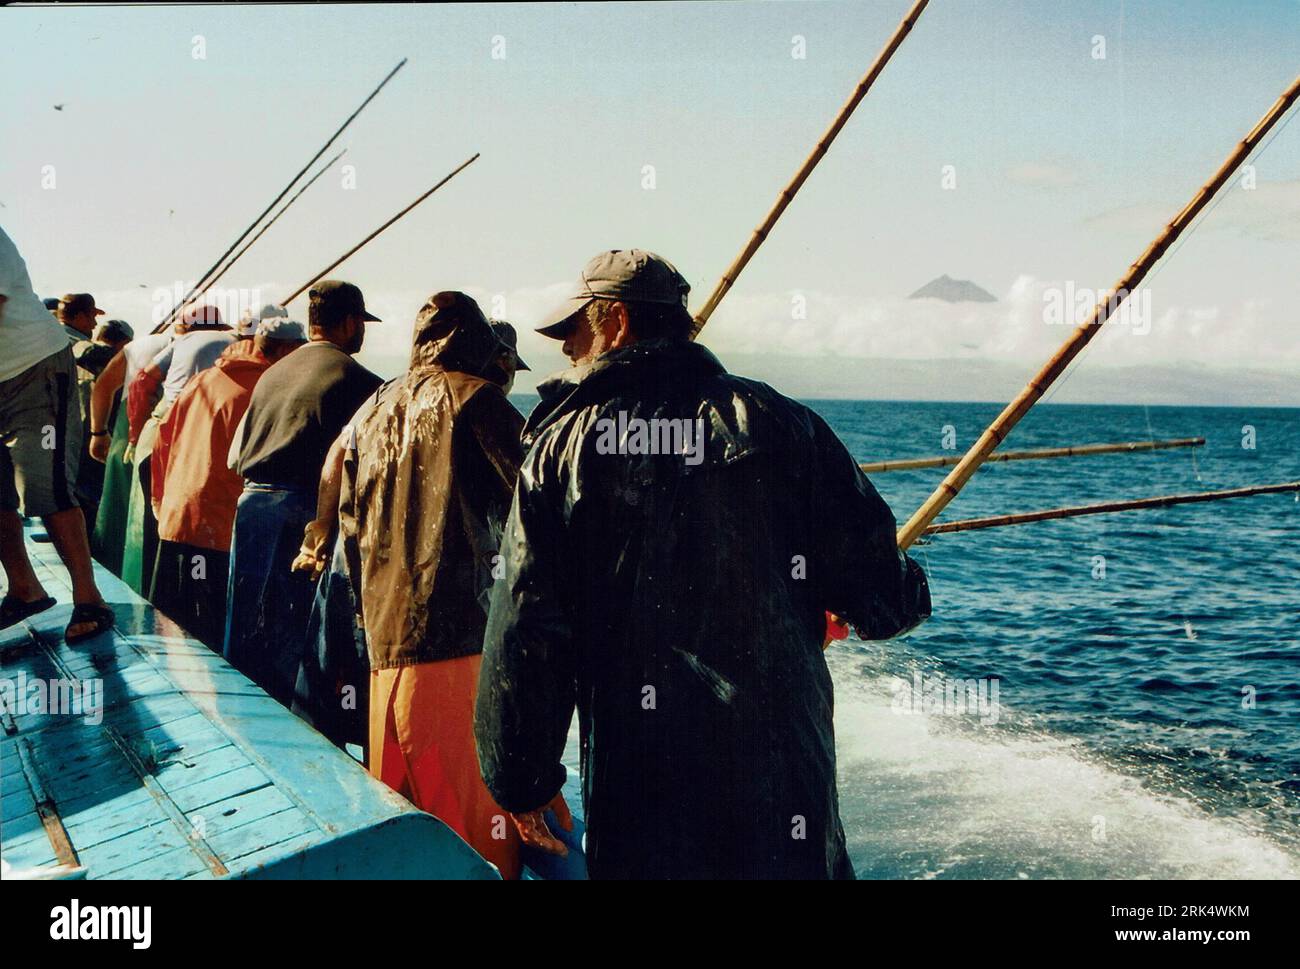 This pole and line tuna fishing : r/Damnthatsinteresting